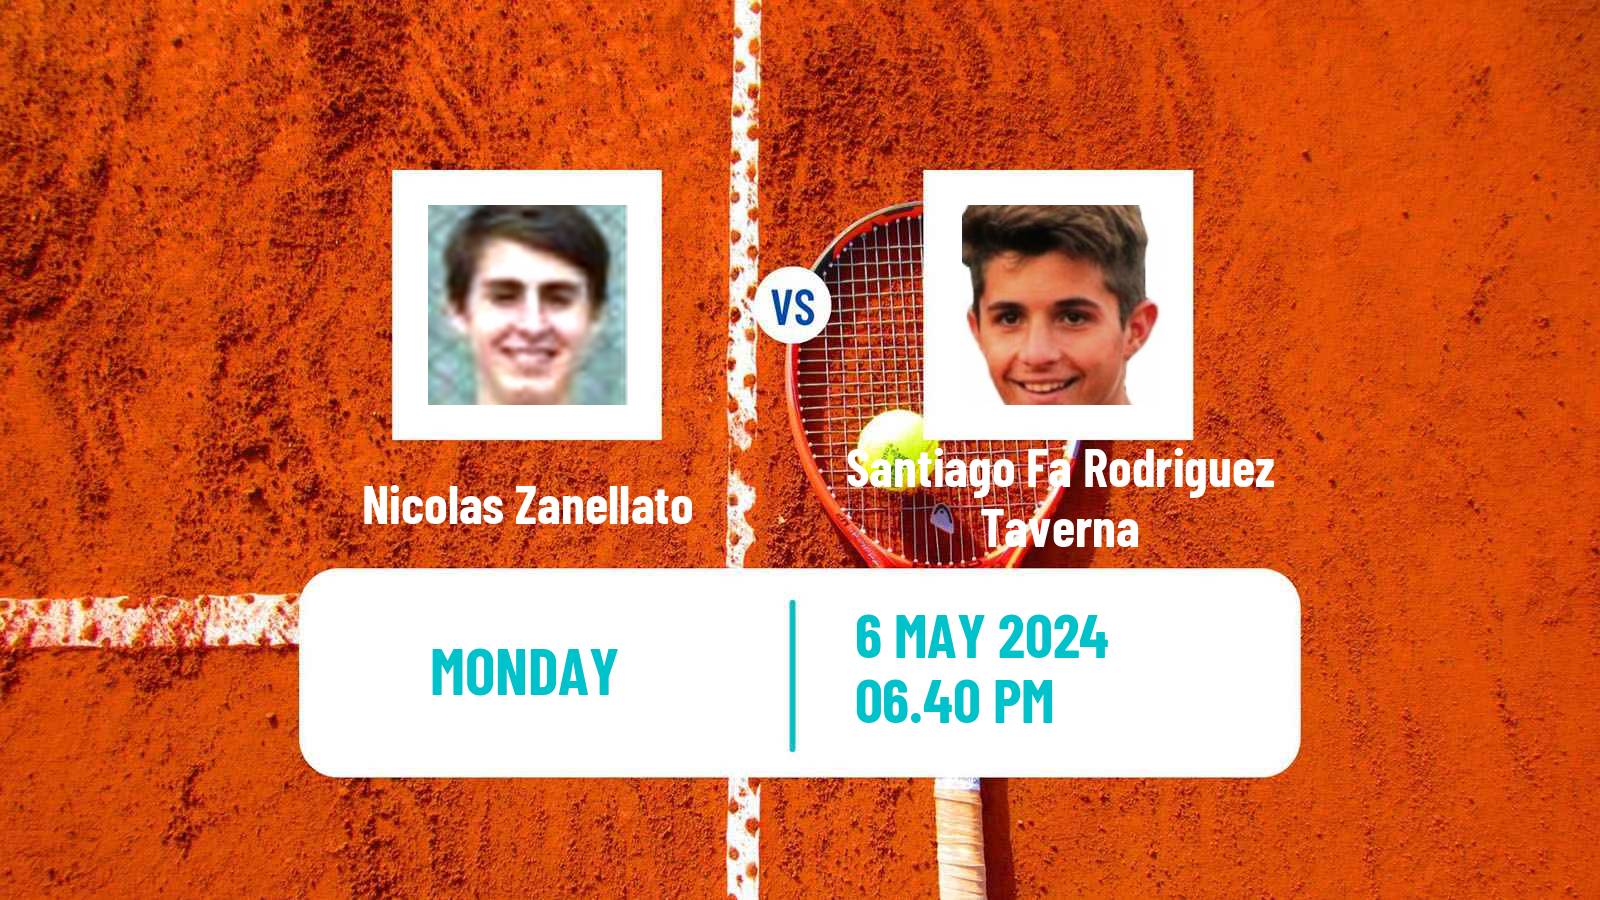 Tennis Santos Challenger Men Nicolas Zanellato - Santiago Fa Rodriguez Taverna